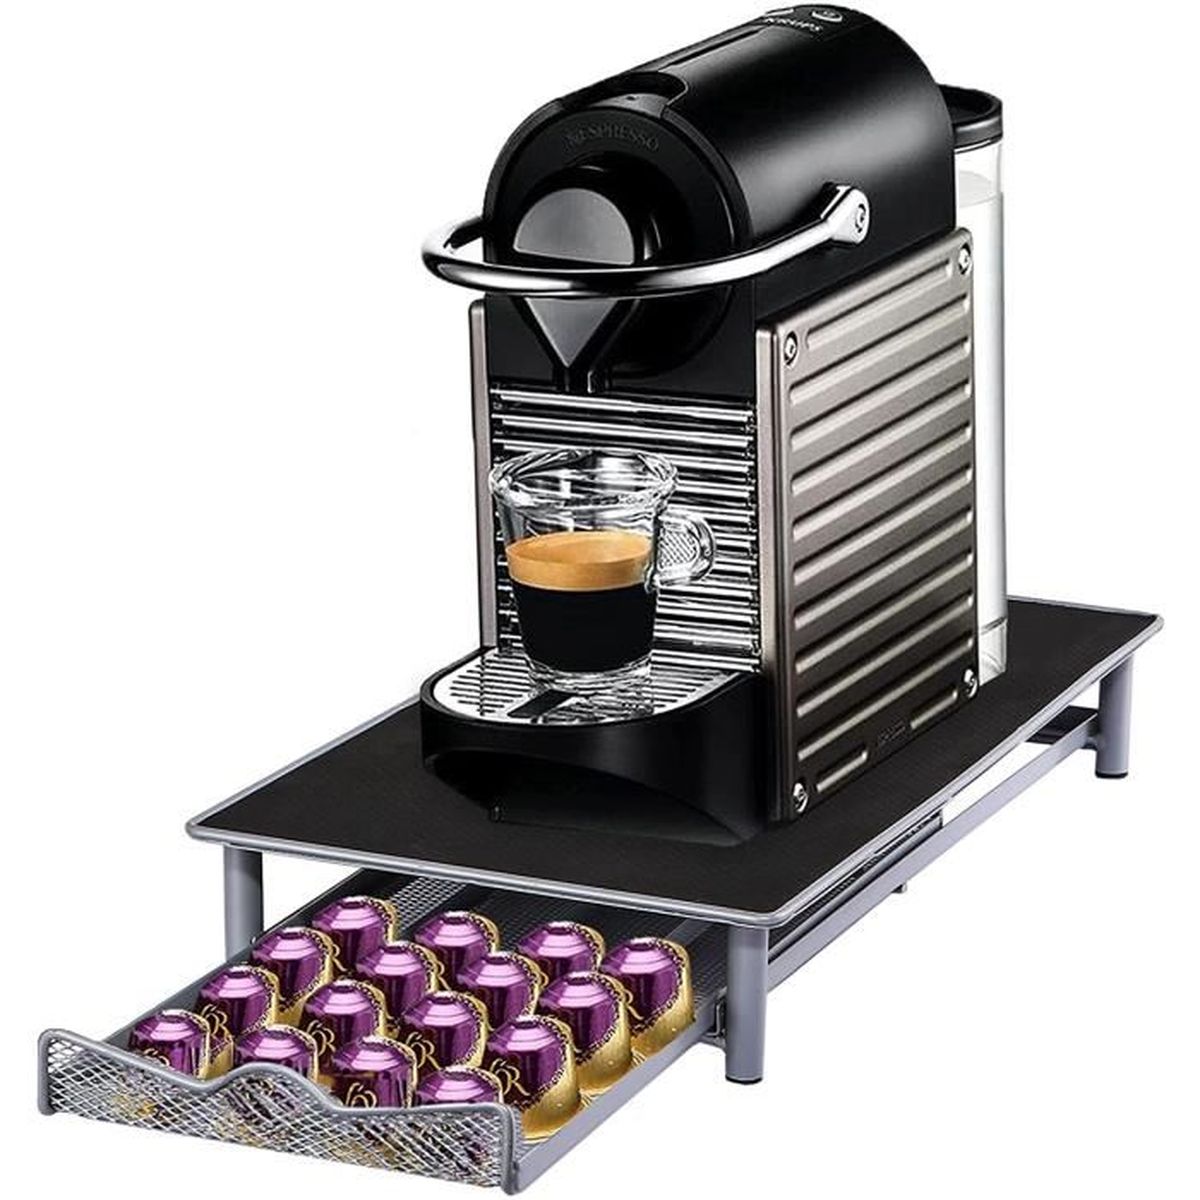 Distributeur Capsules Nespresso Porte Dosette 3 Tiroirs Support Machine à Café 